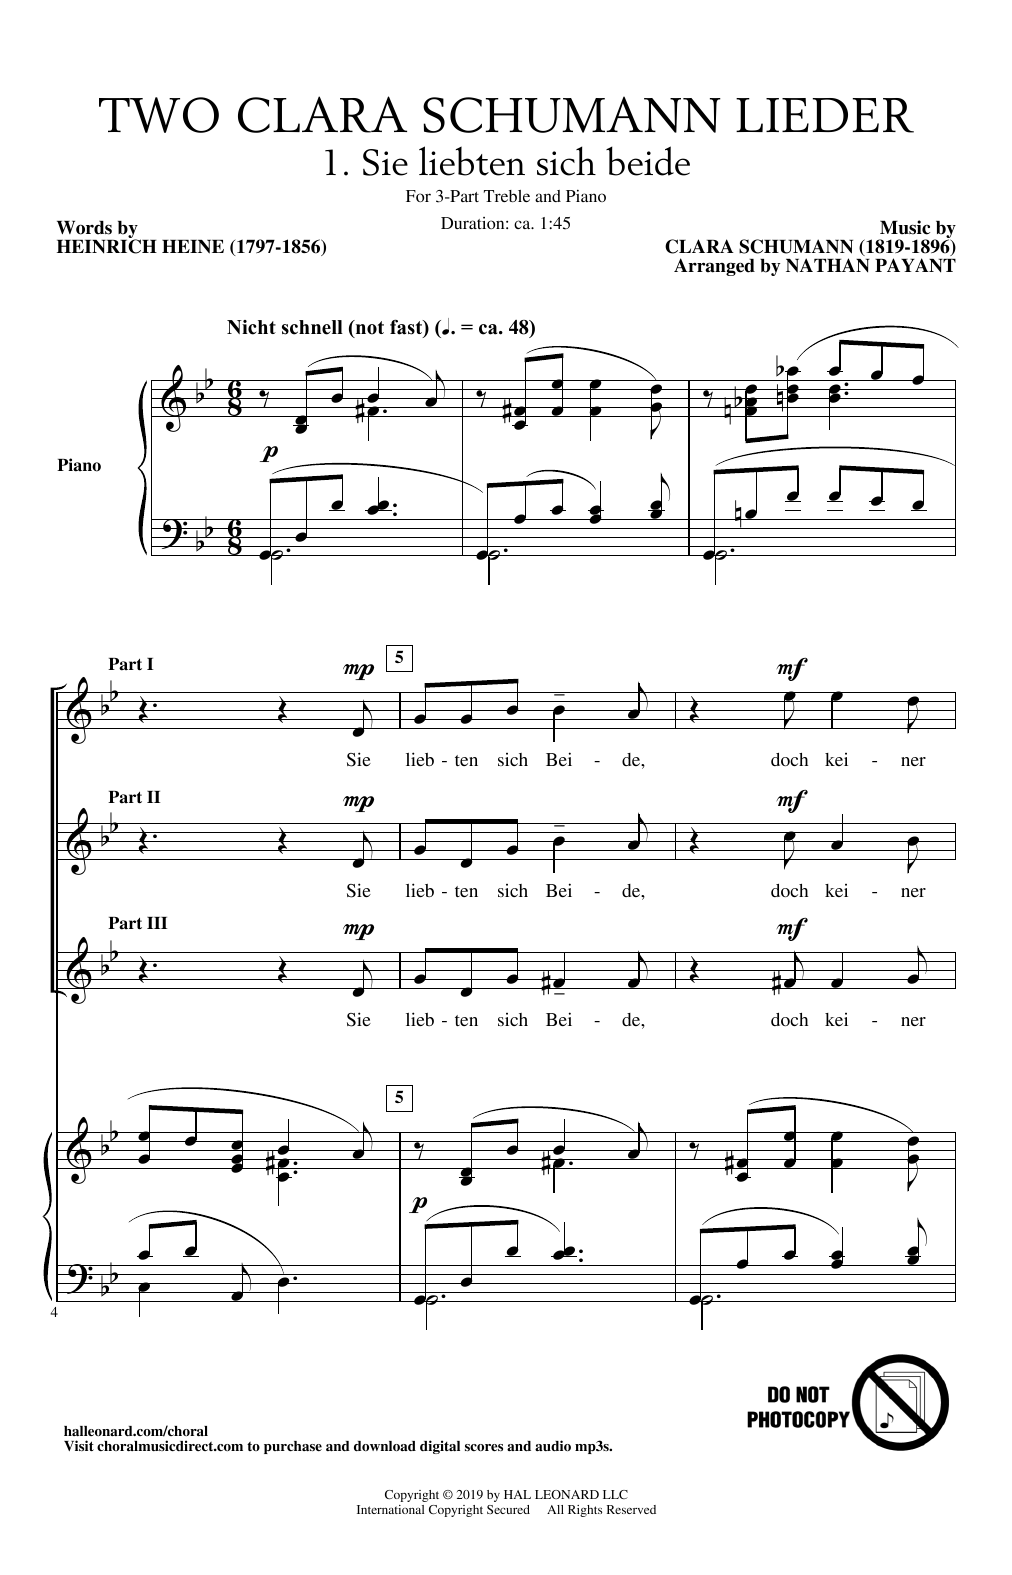 Clara Schumann Two Clara Schumann Lieder (arr. Nathan Payant) Sheet Music Notes & Chords for SSA Choir - Download or Print PDF